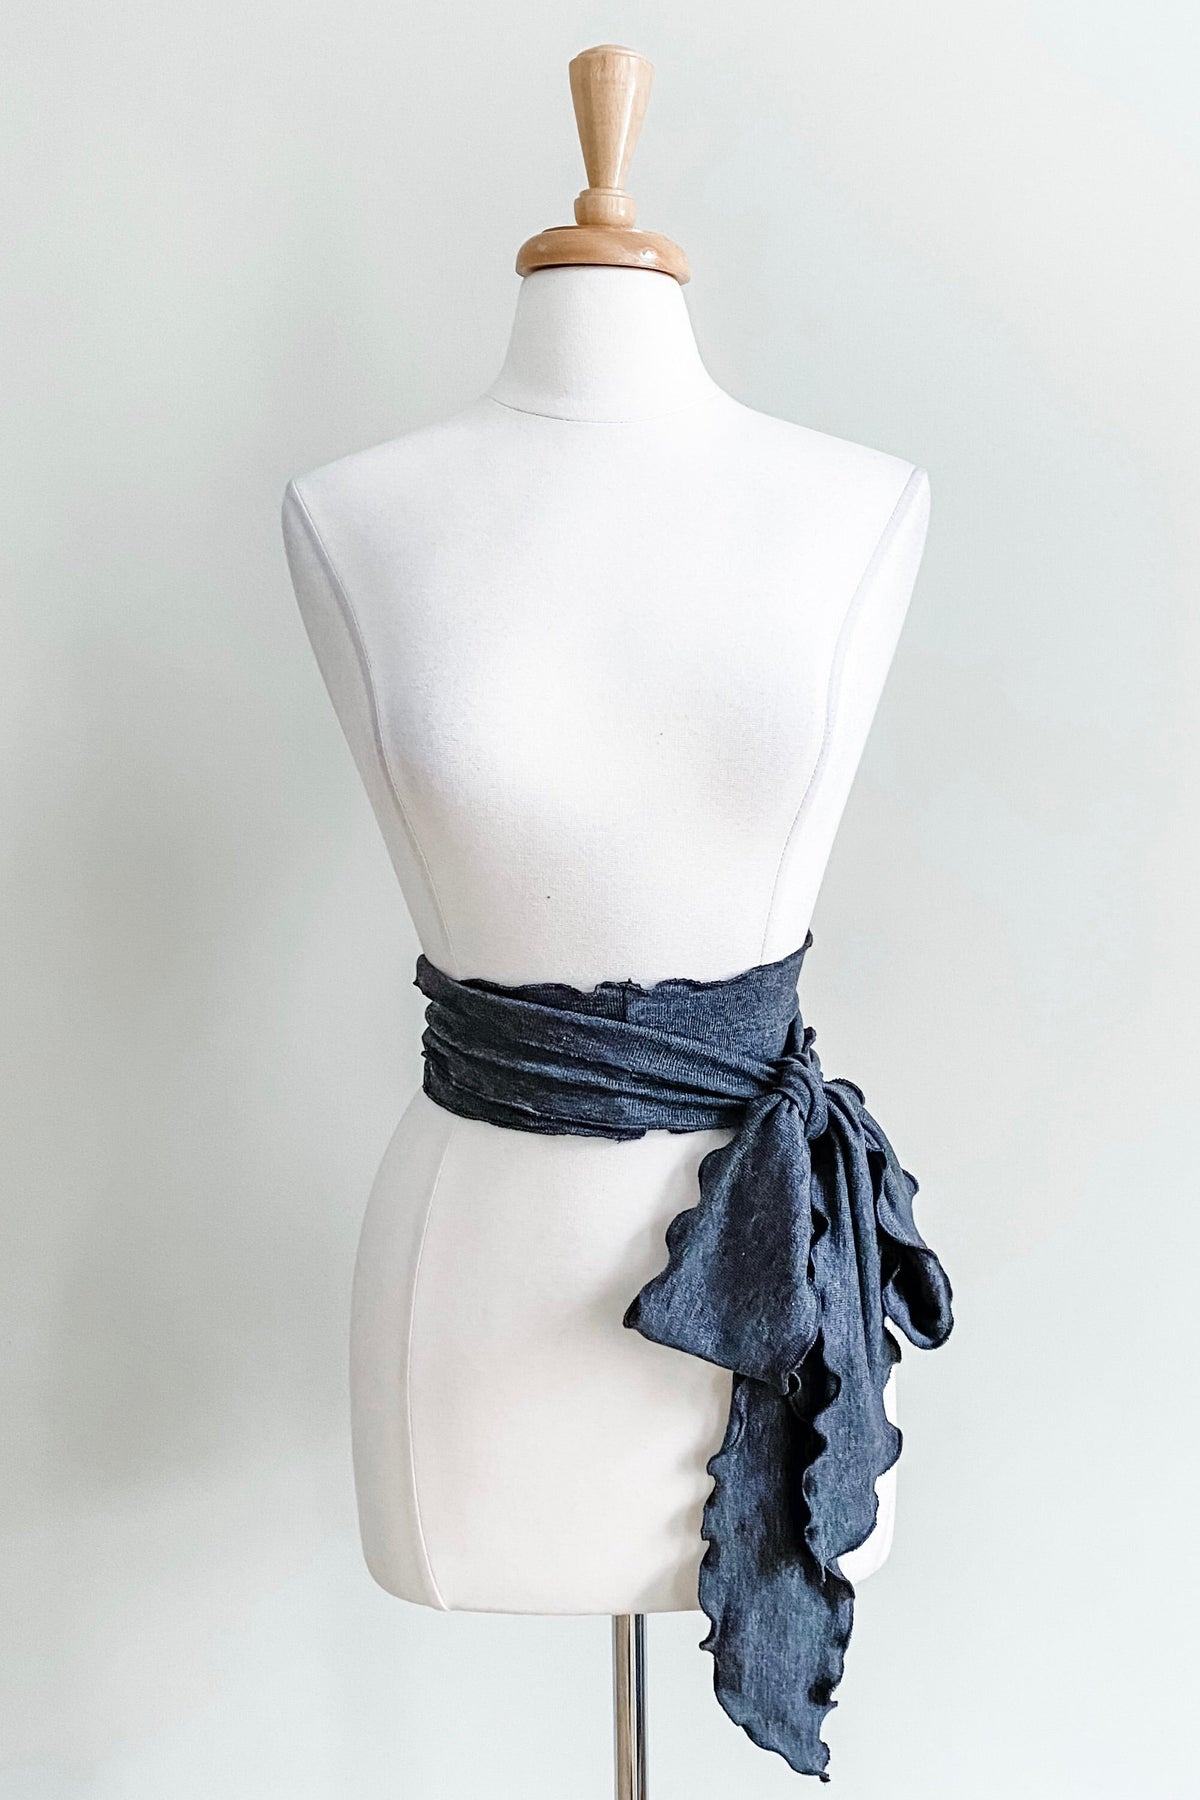 Diane Kroe - Scalloped Sash Belt in Infinity Knit (Charcoal Grey)